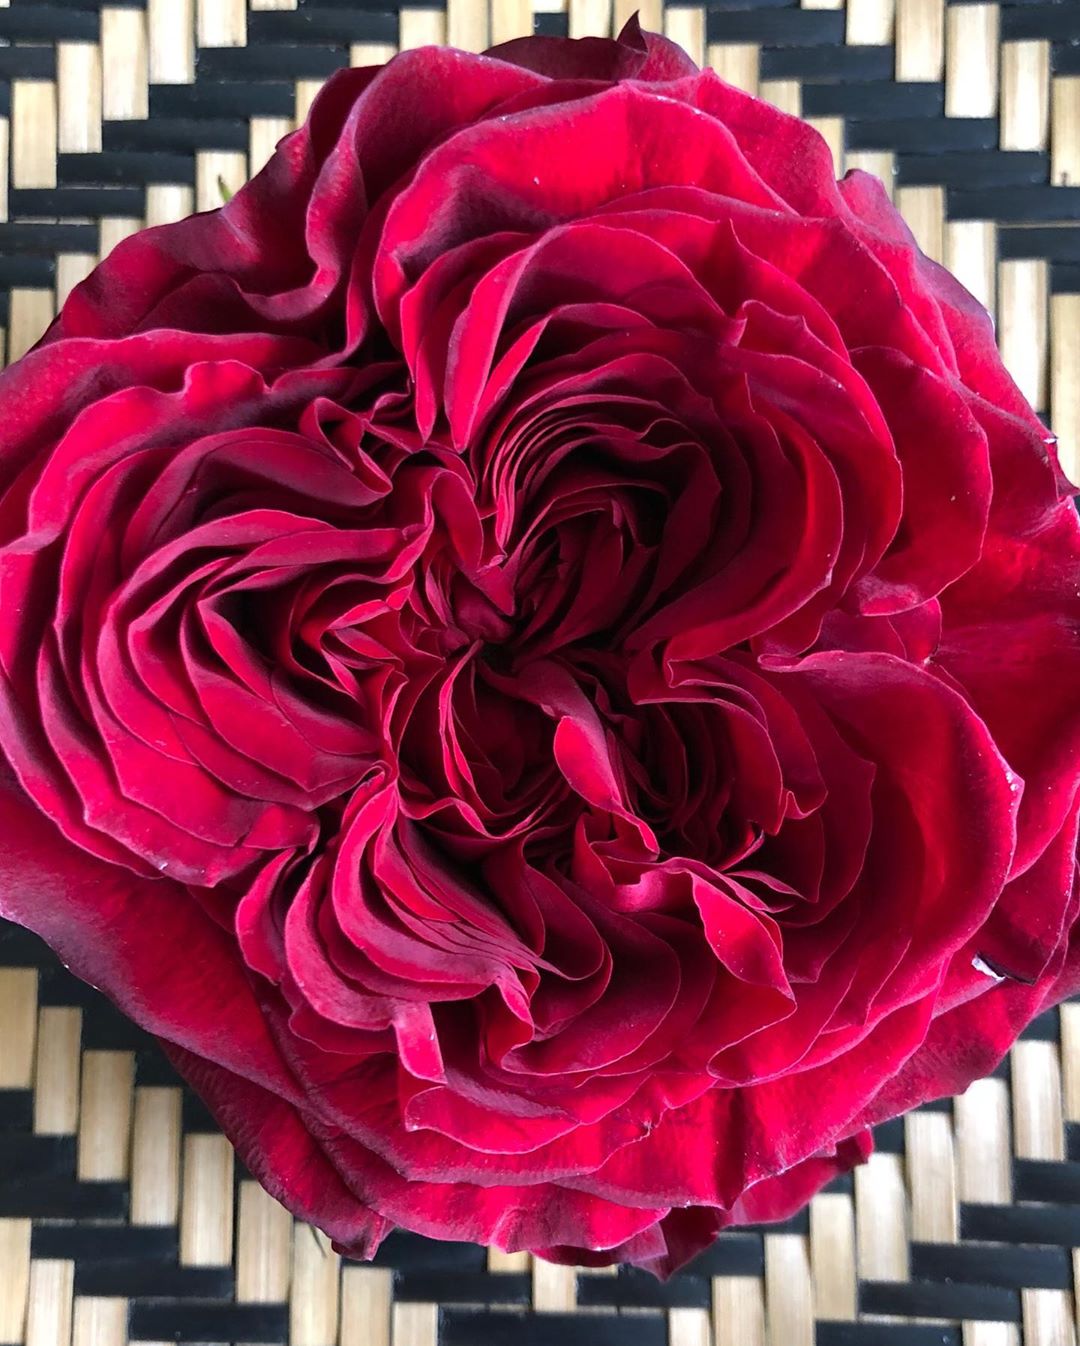 Mayra's red garden rose by Continental breeding - on Thursd